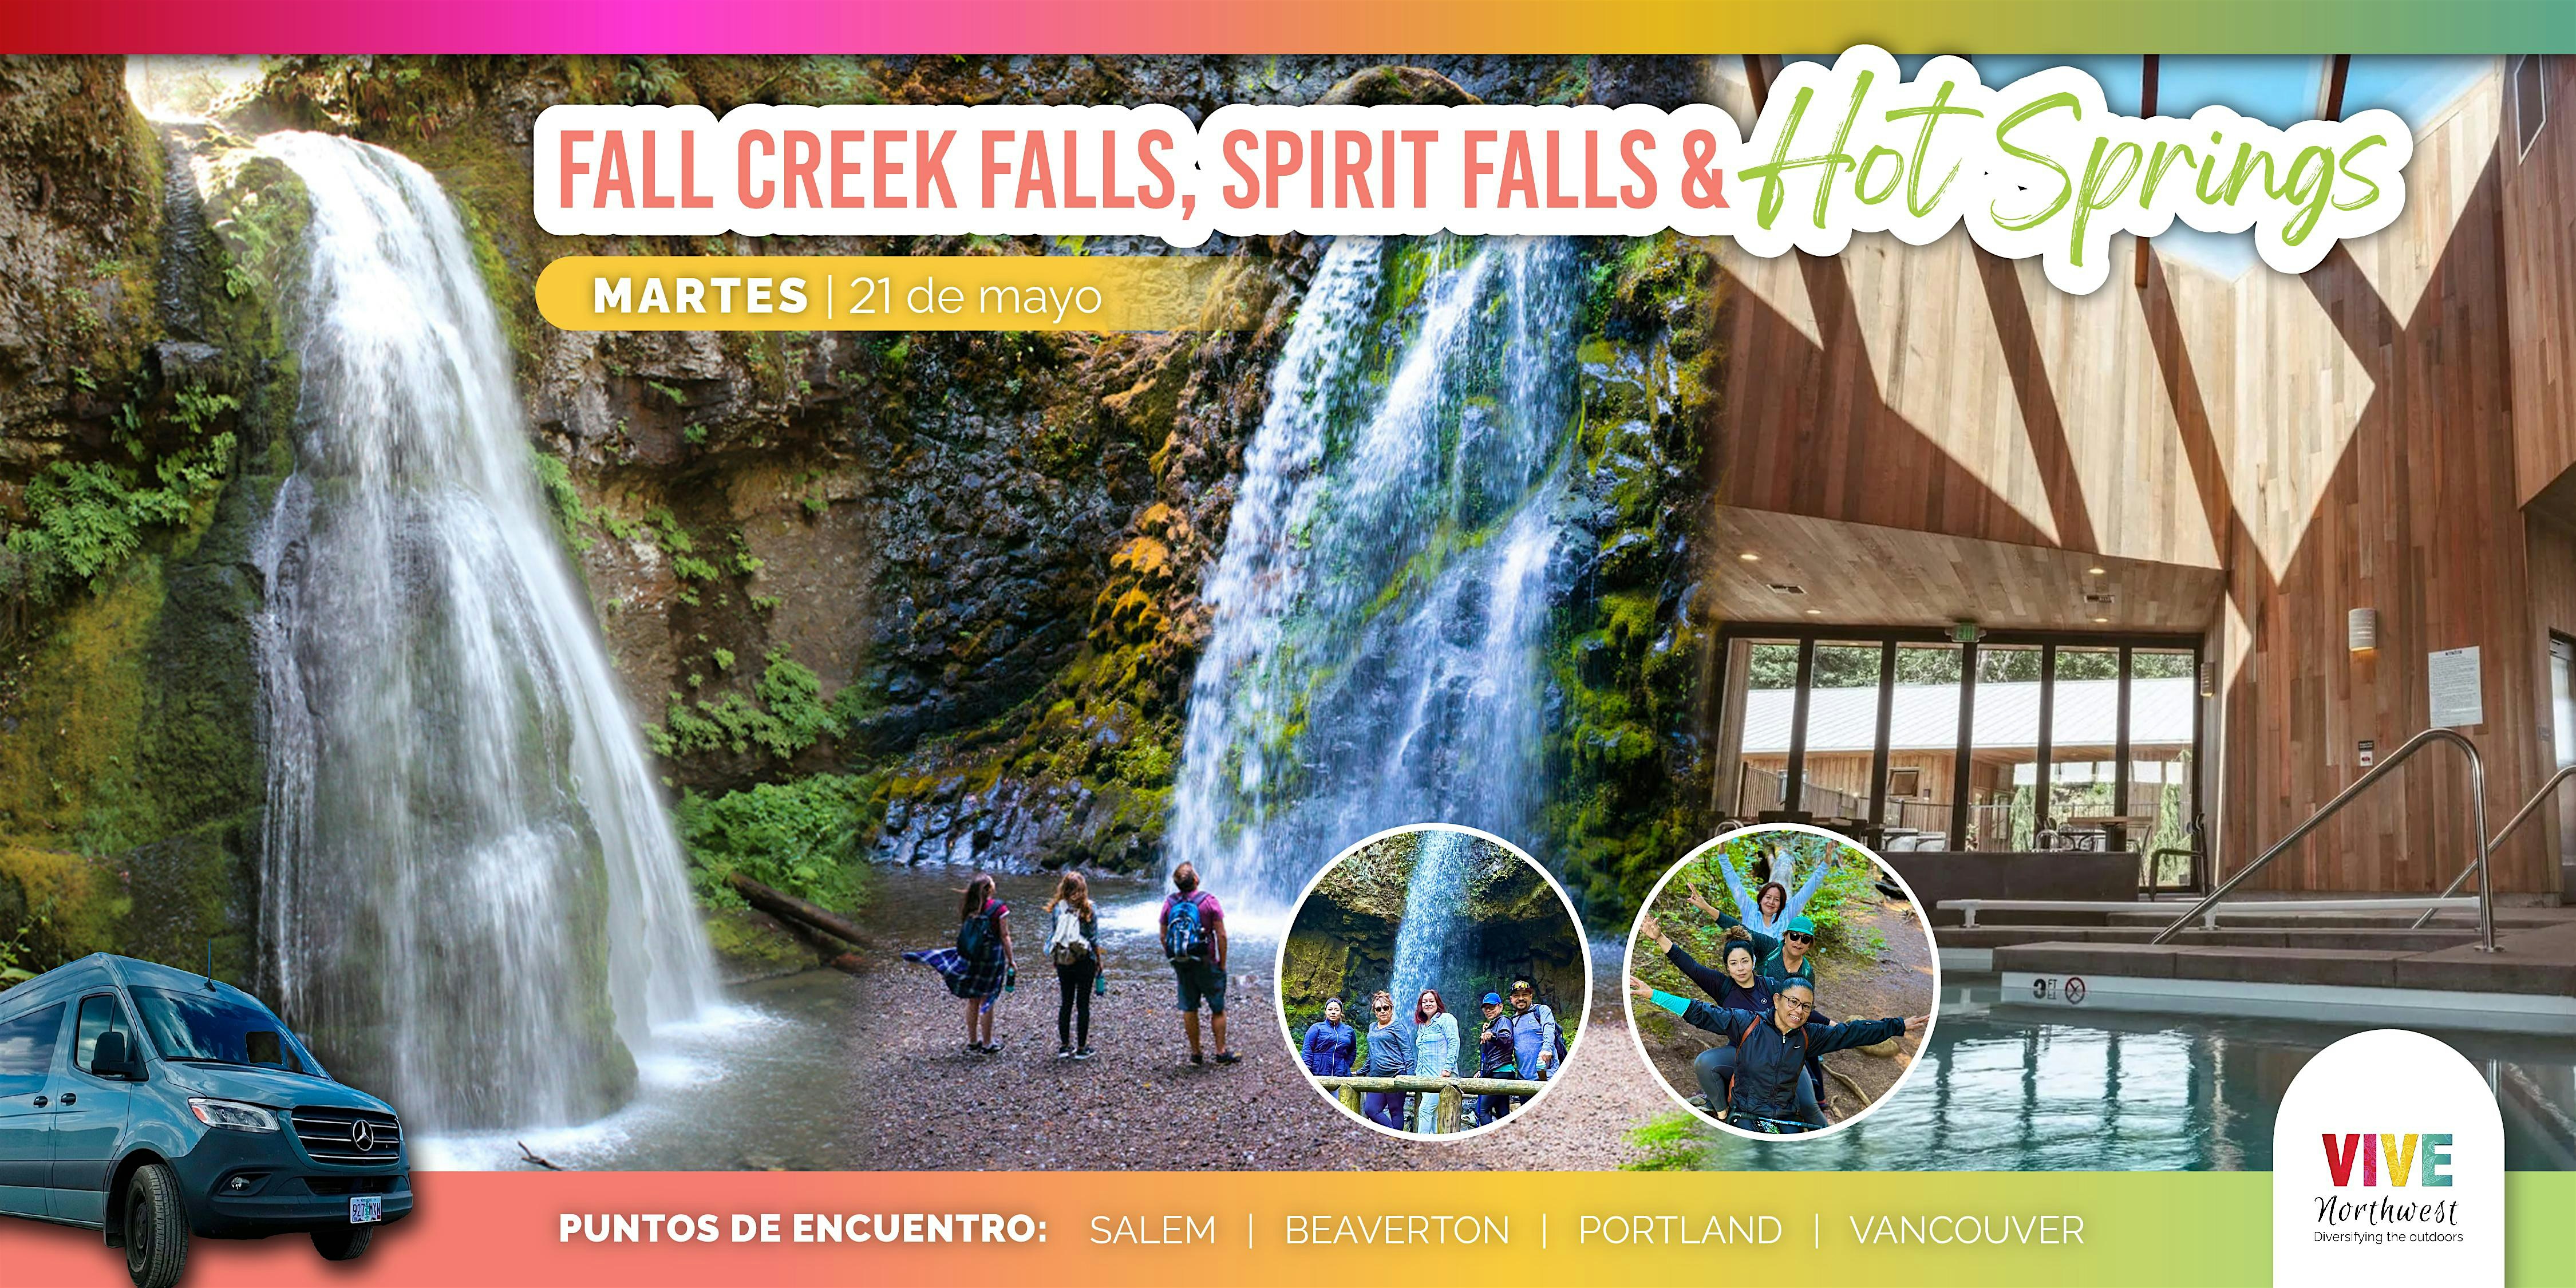 \u00a1Visita Fall Creek Falls y sum\u00e9rgete en aguas termales con Vive NW!